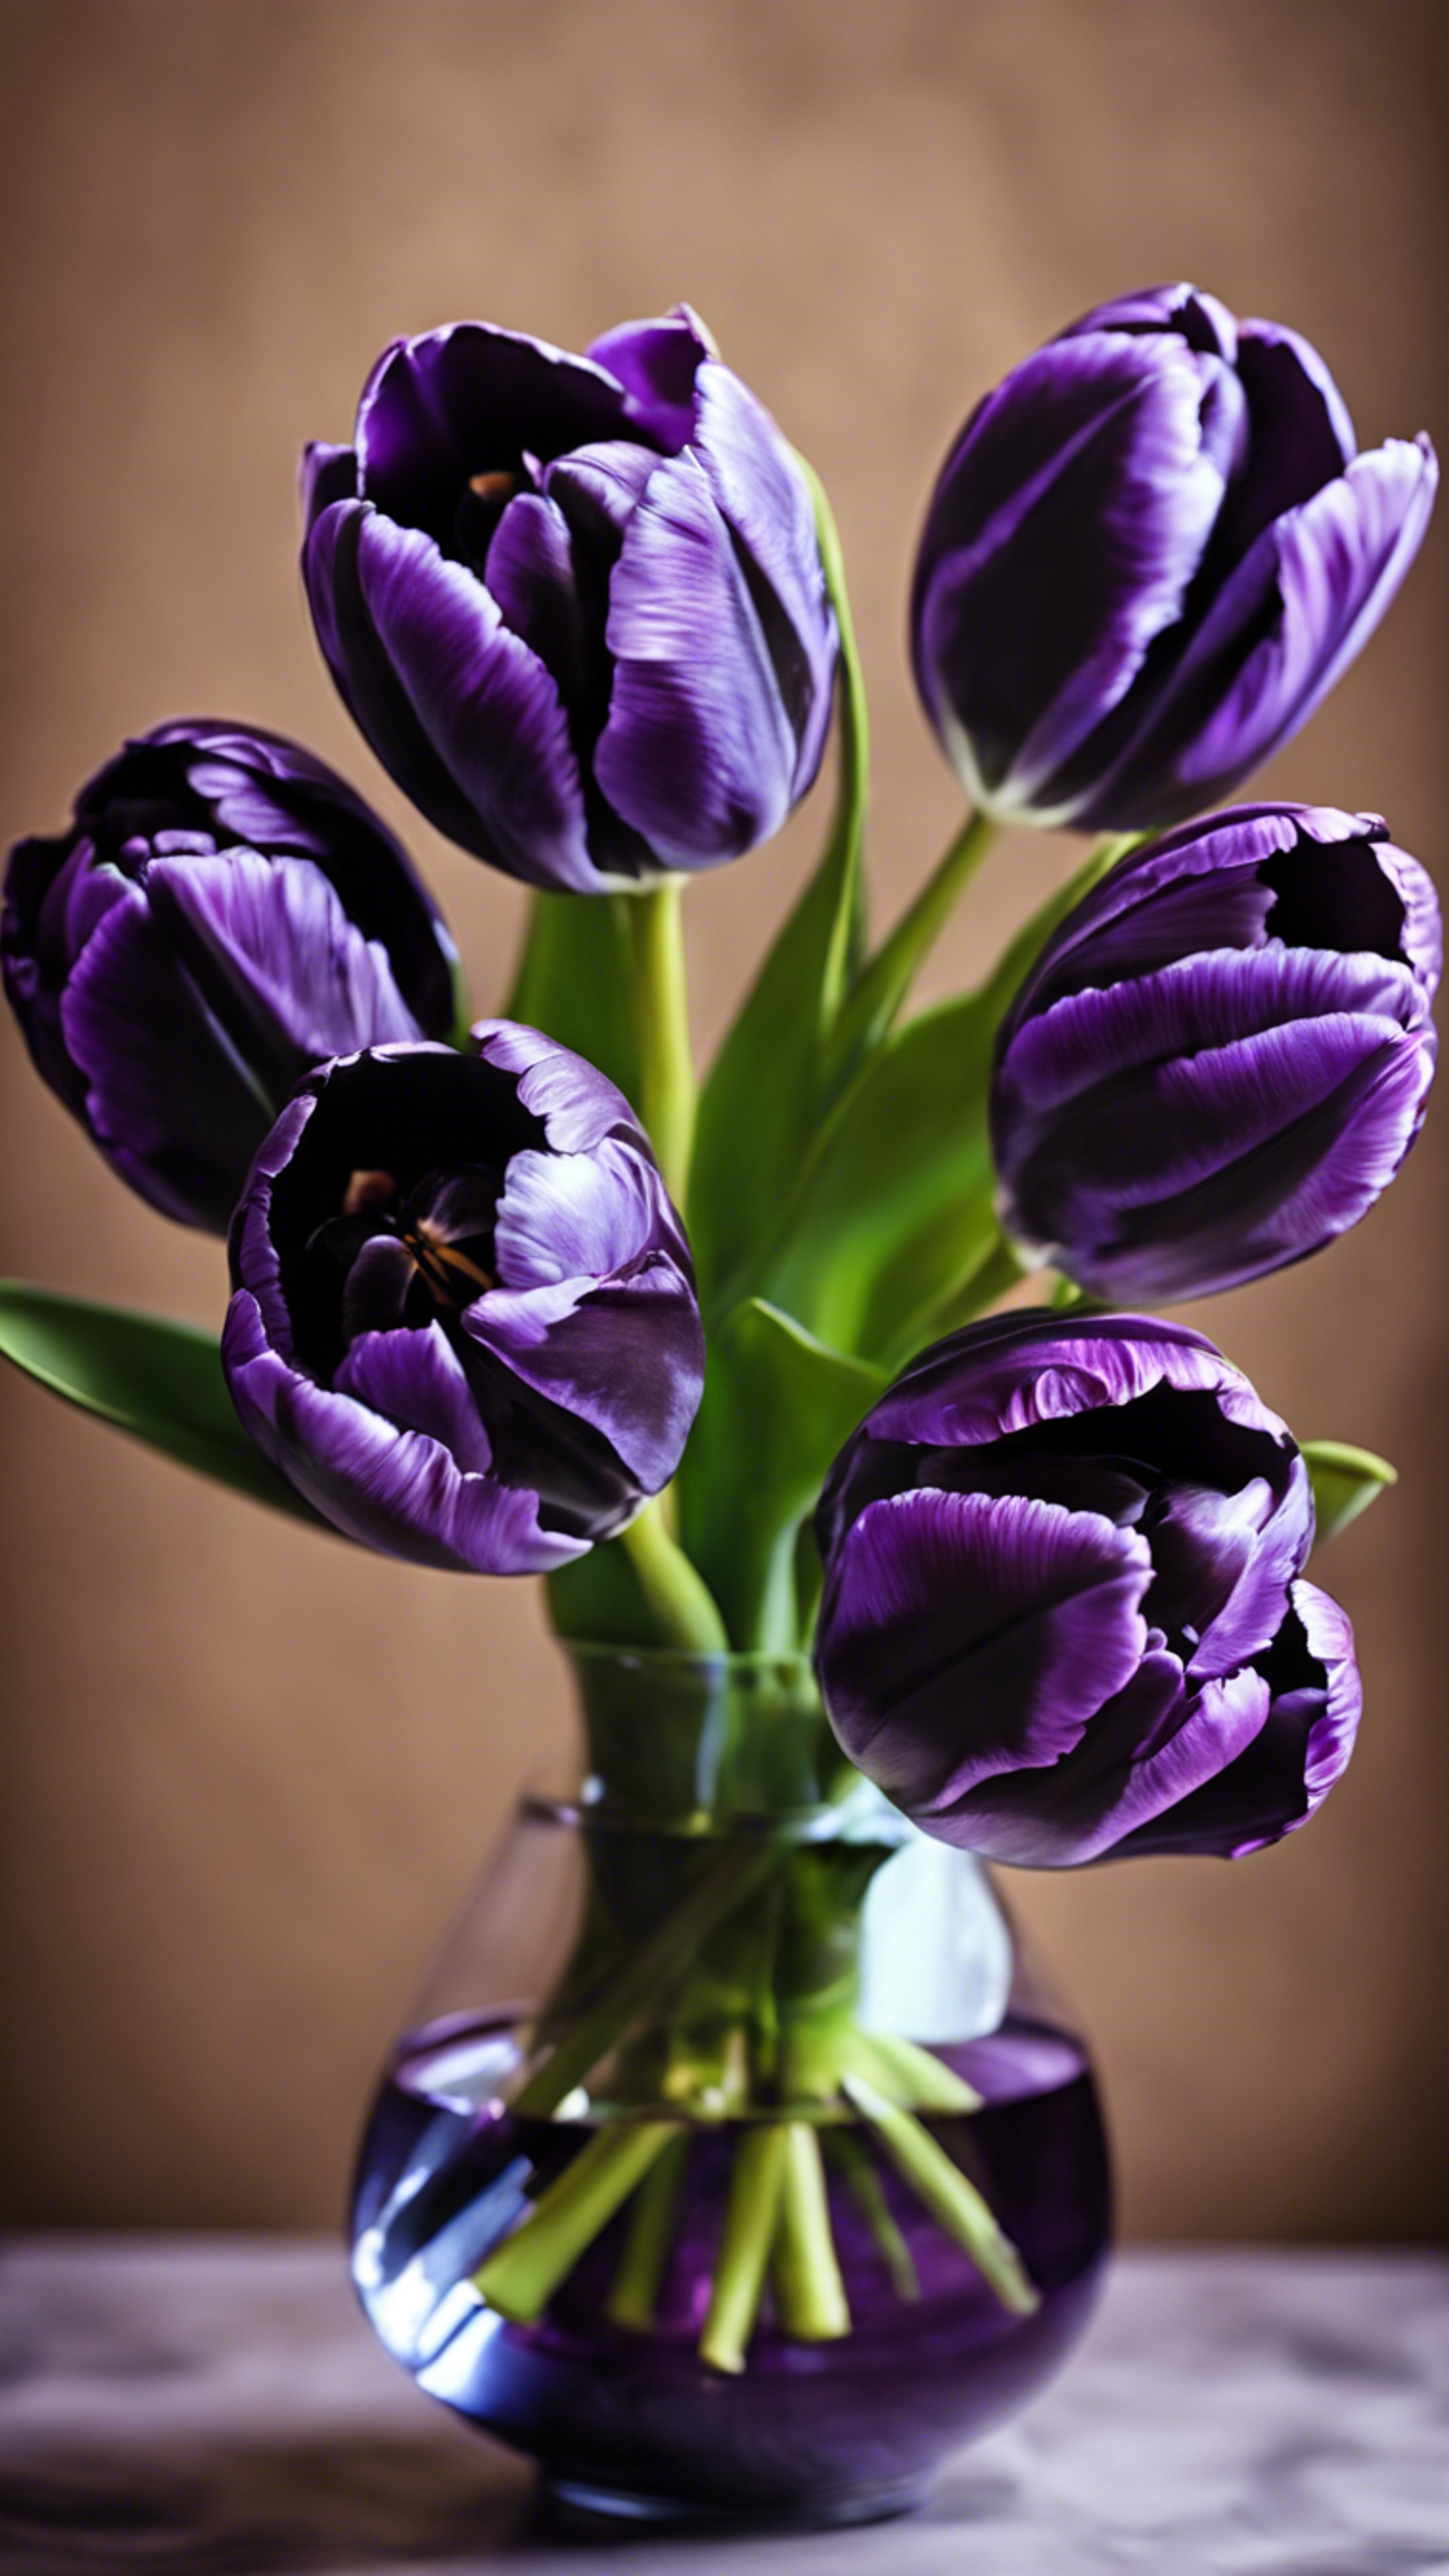 Black tulips with purple edges in full bloom in an elegant vase. 墙纸[bf30bf151b944cb69afa]